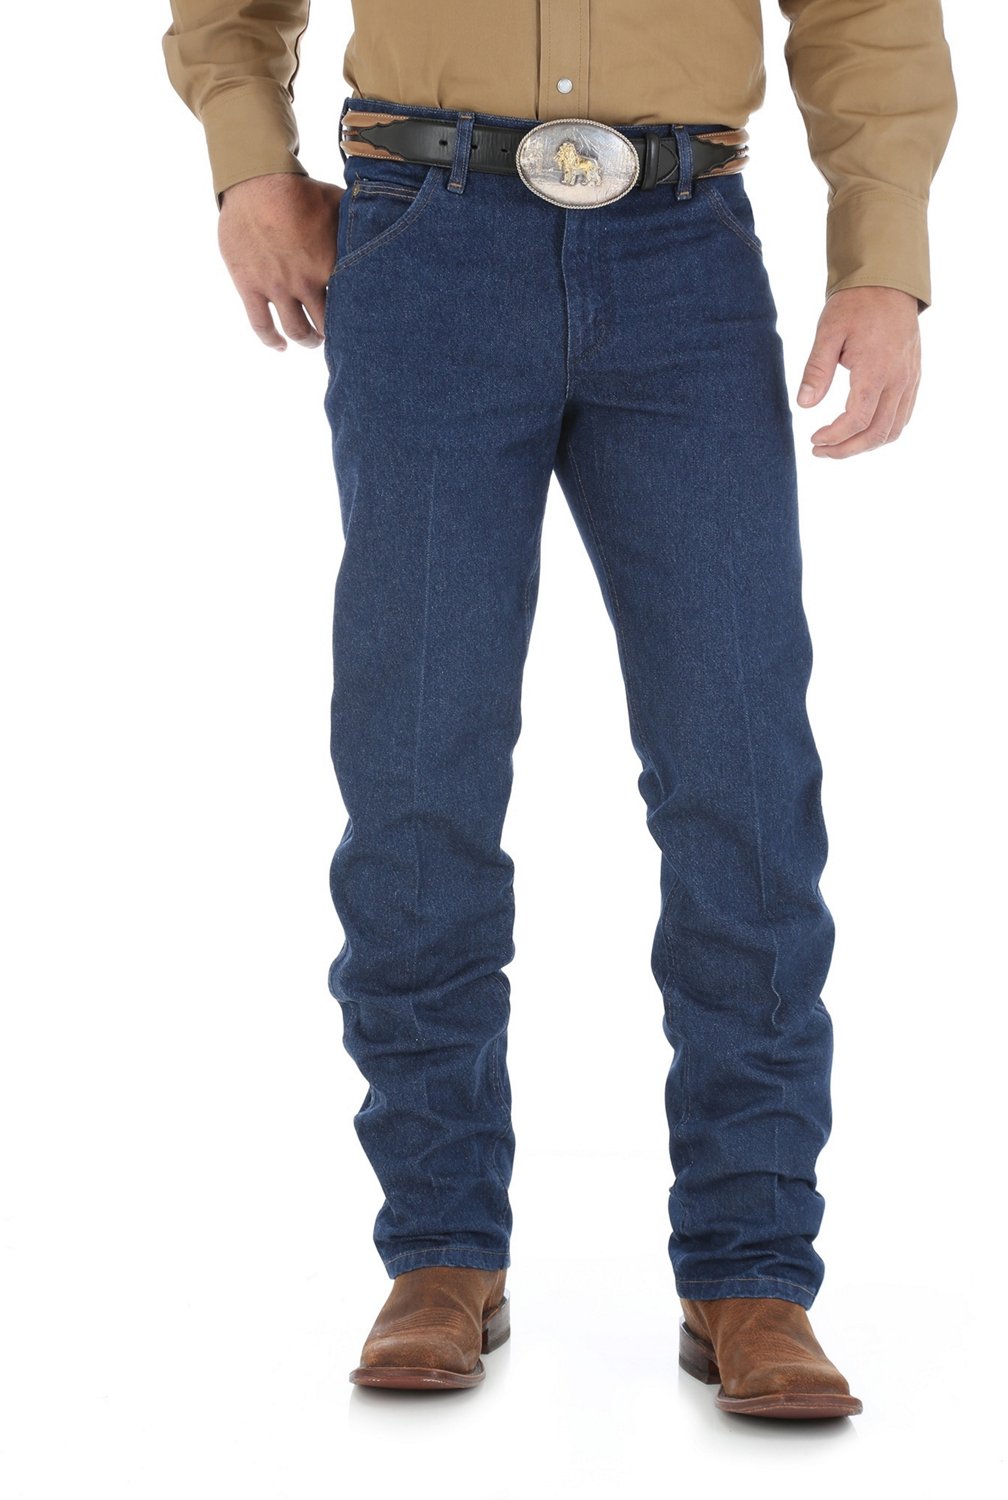 size 3 jeans waist size